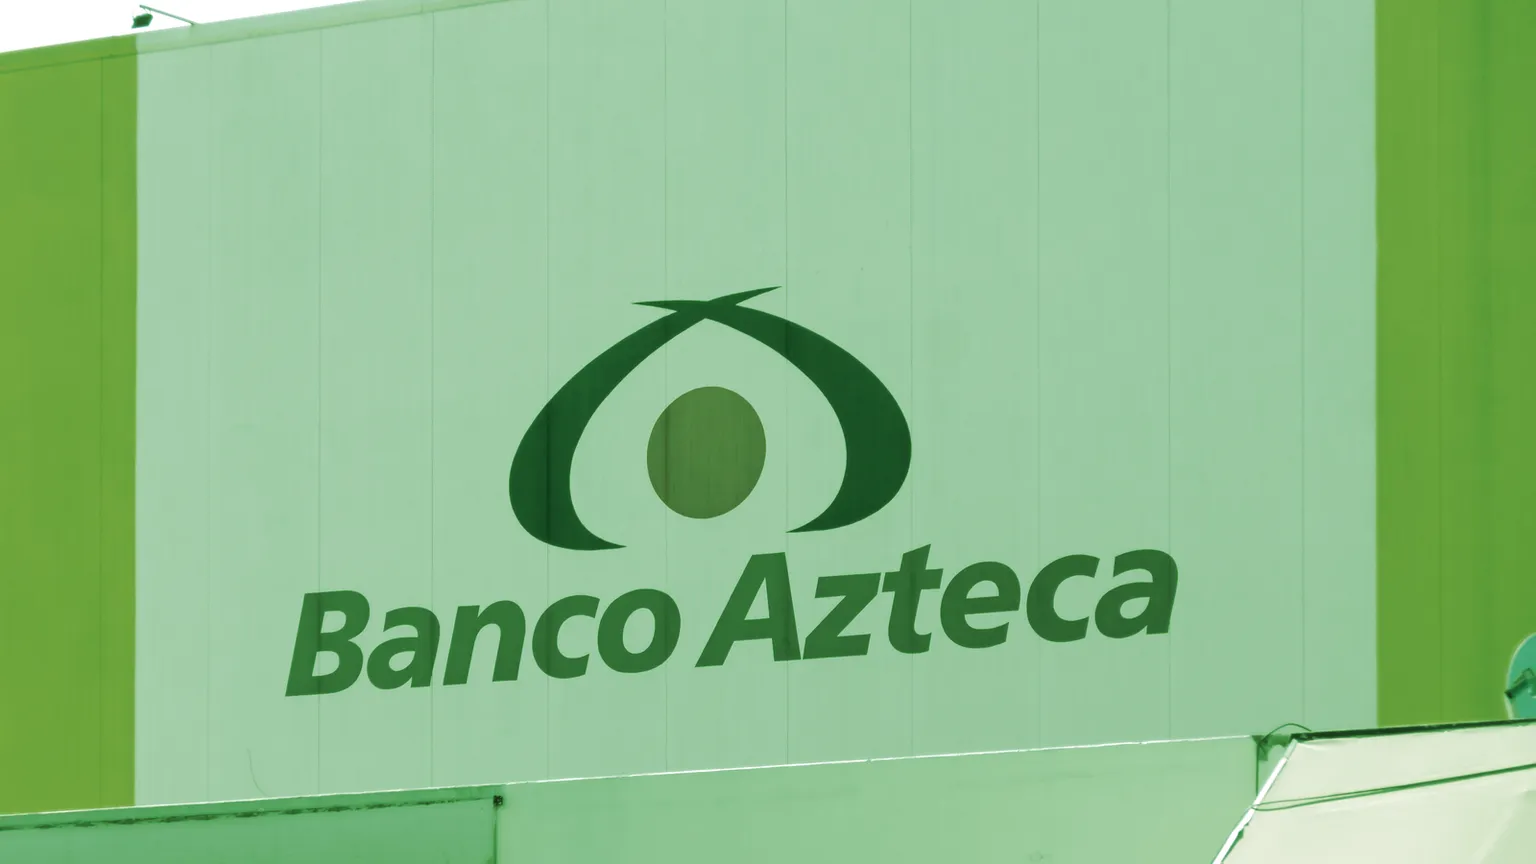 Advertisement for "Banco Azteca" in Guadalajara Jalisco, Mexico. Image: Shutterstock